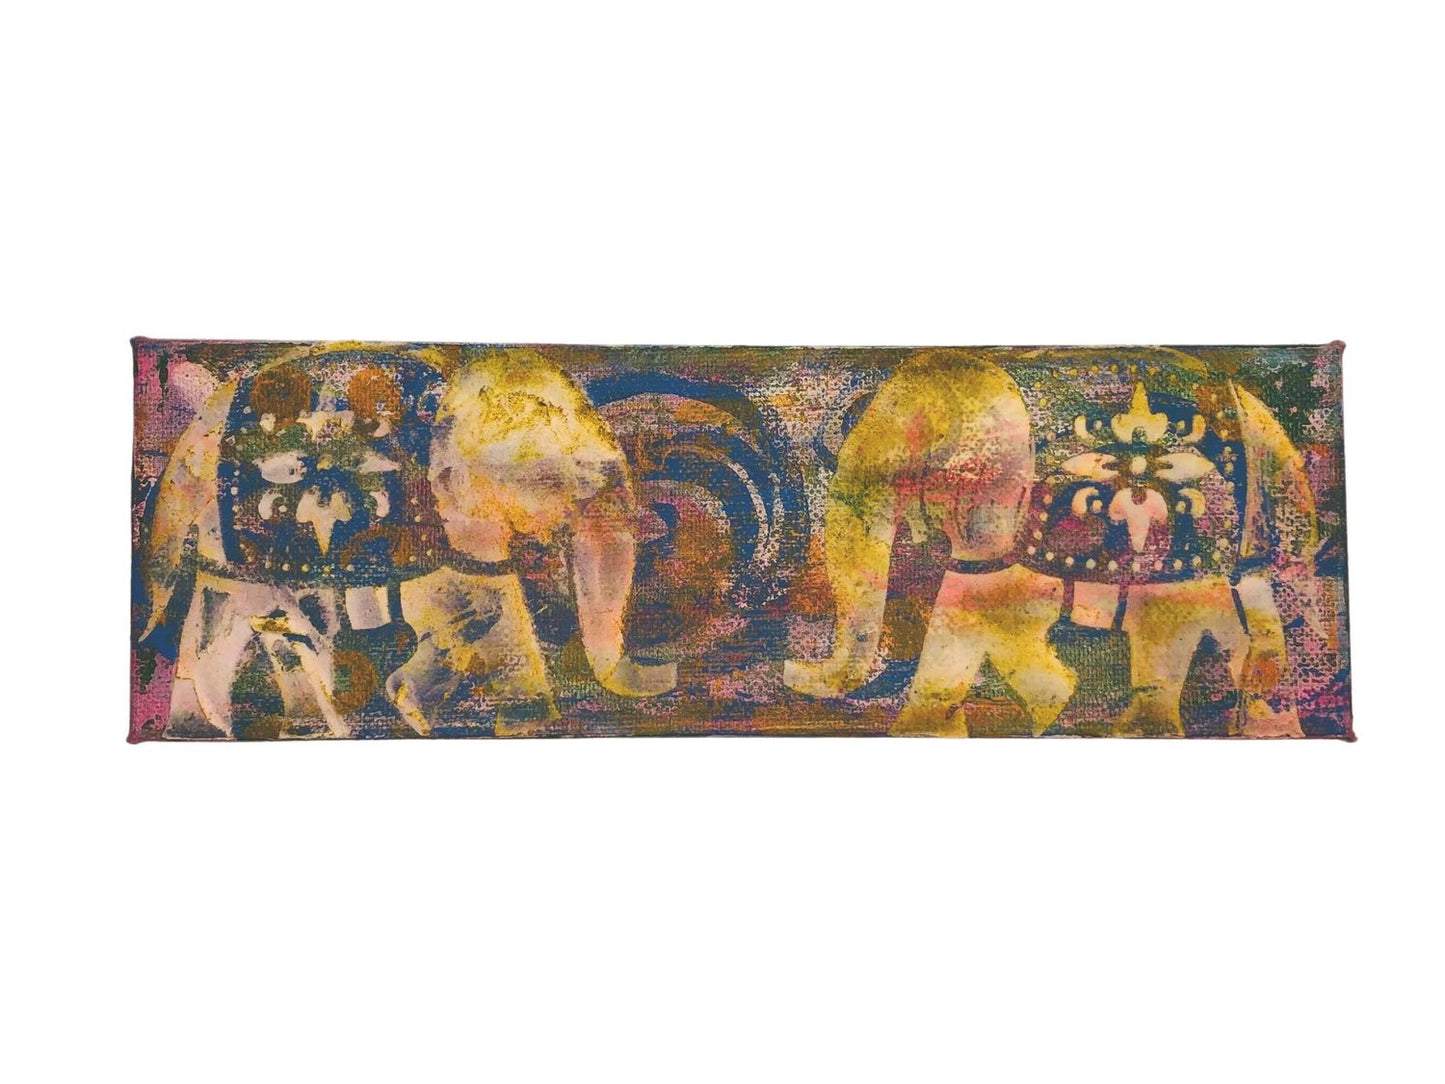 Elephant Pair Mixed Media on Canvas